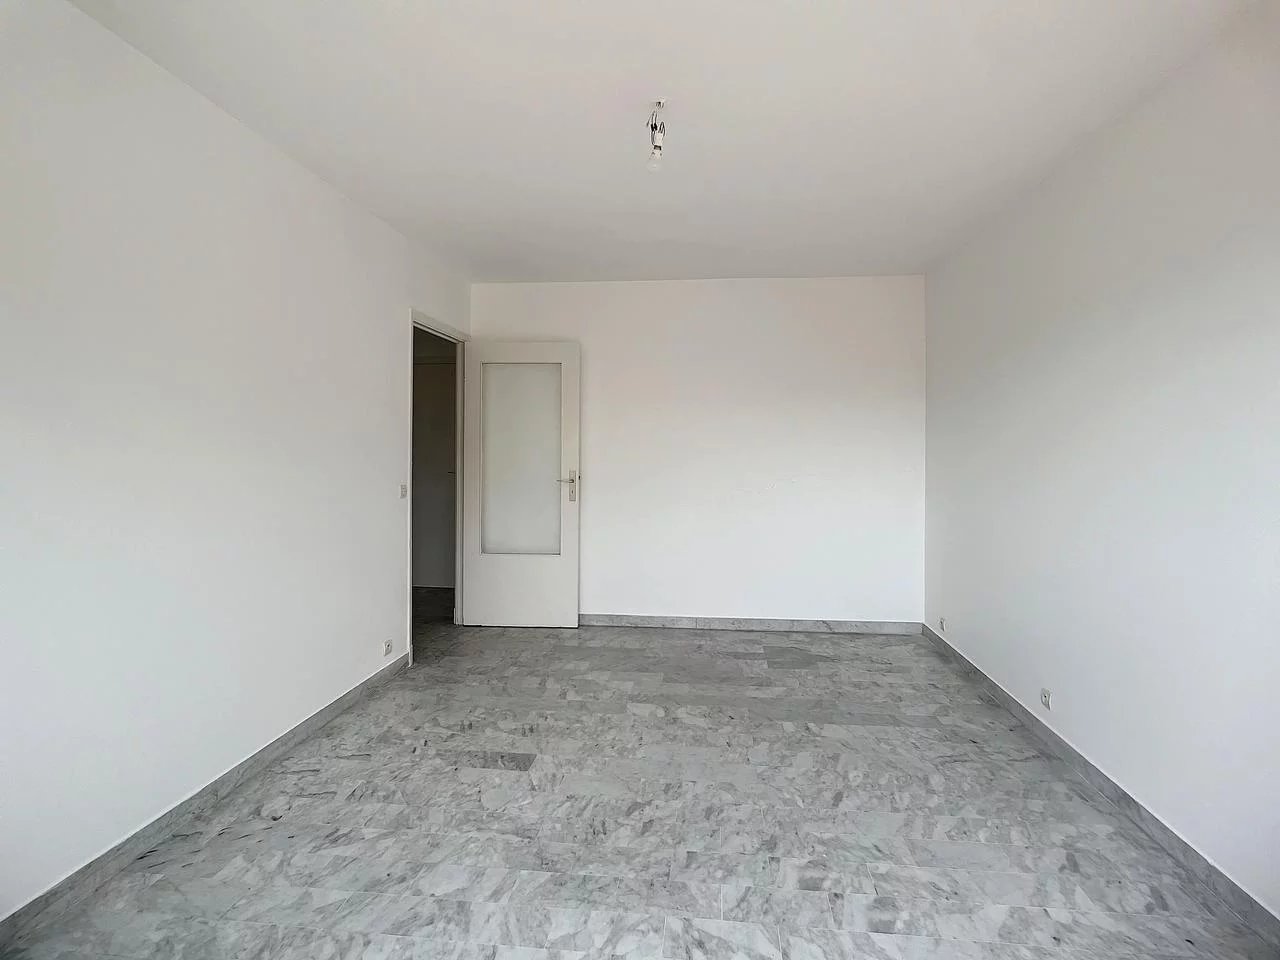 Appartement  2 Locali 43.6m2  In vendita   220 000 €